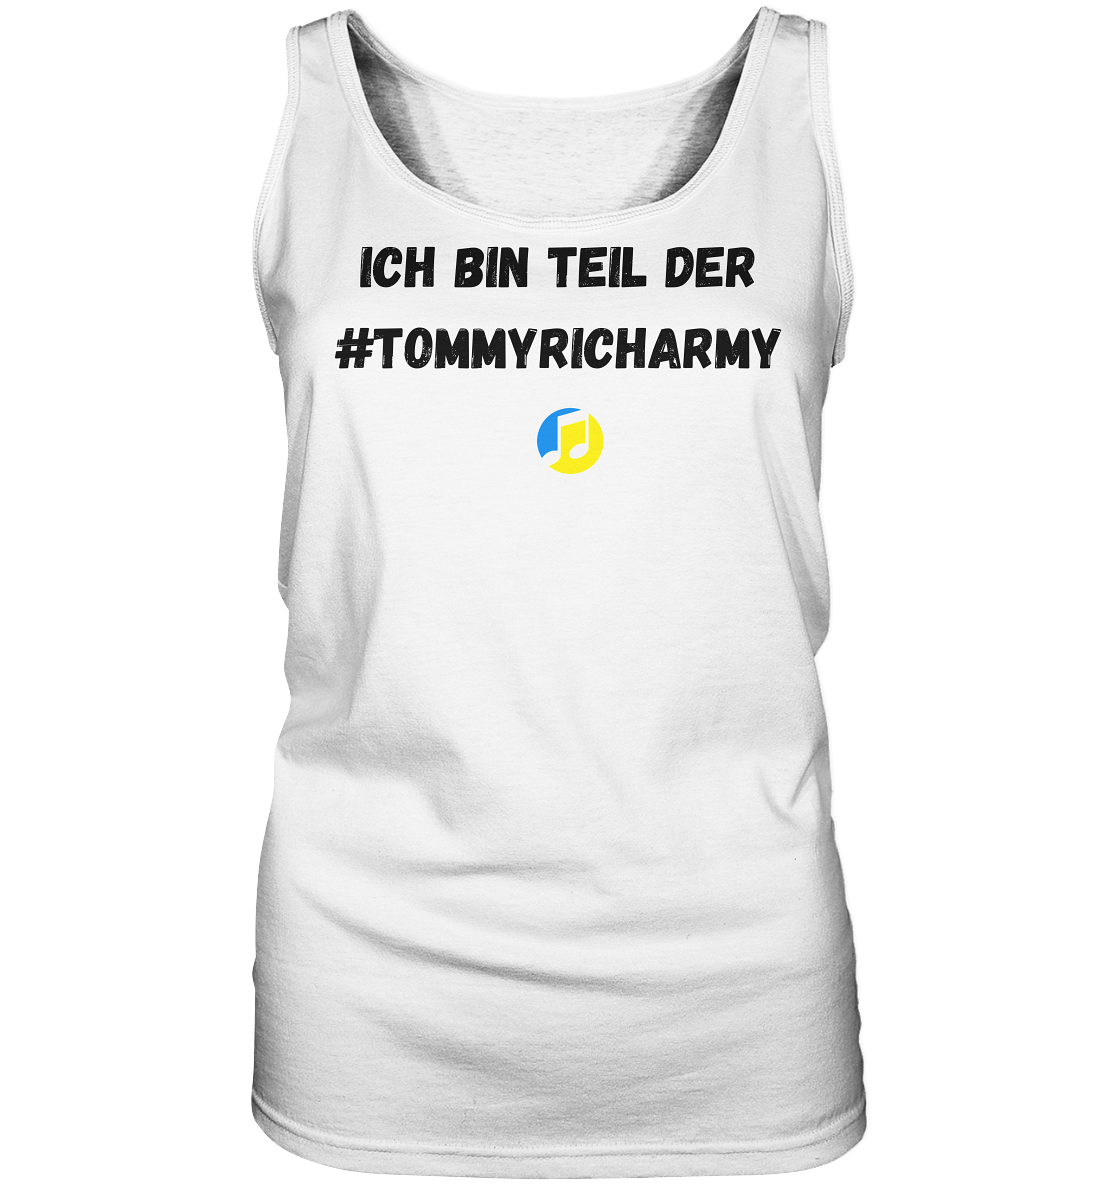 Ladies Tank-Top - #tommyricharmy